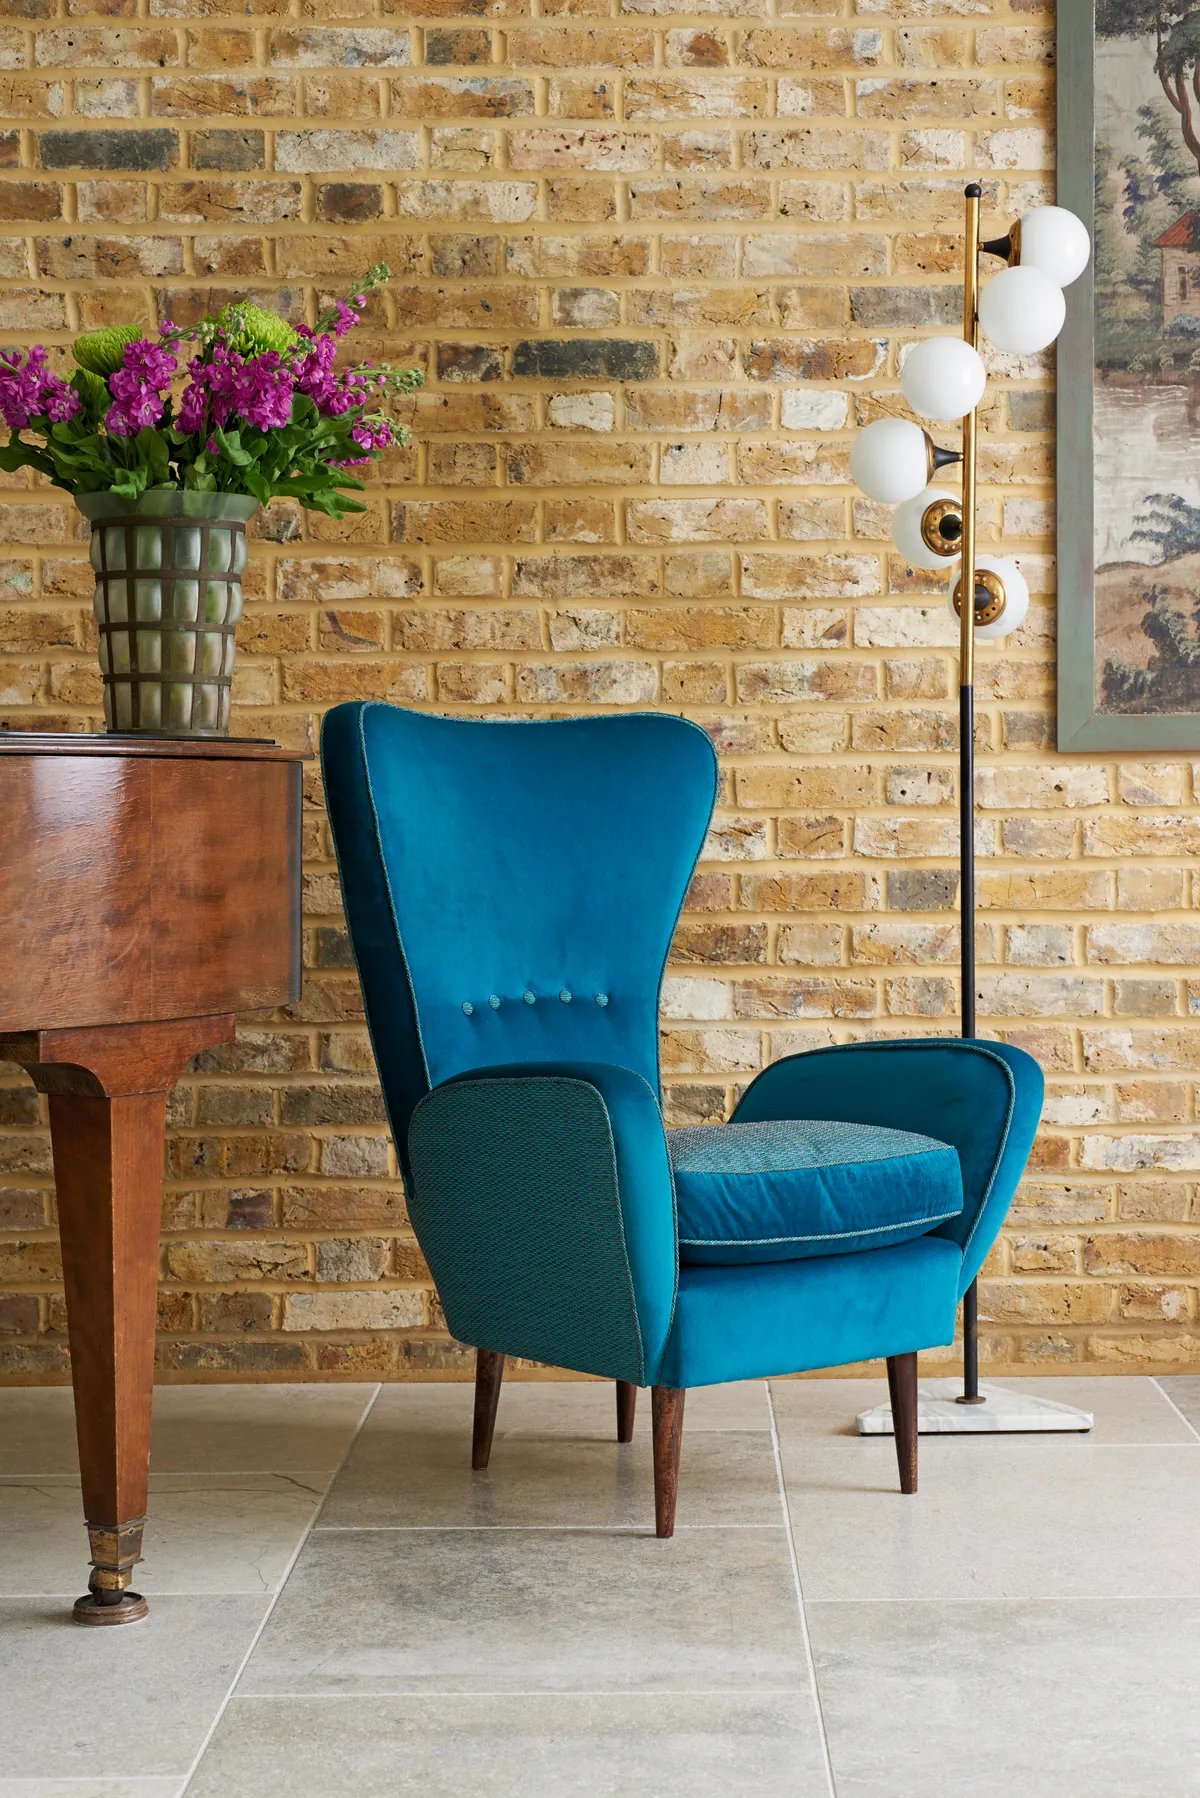 A mid-century style armchair upholstered in rich, dark blue velvet